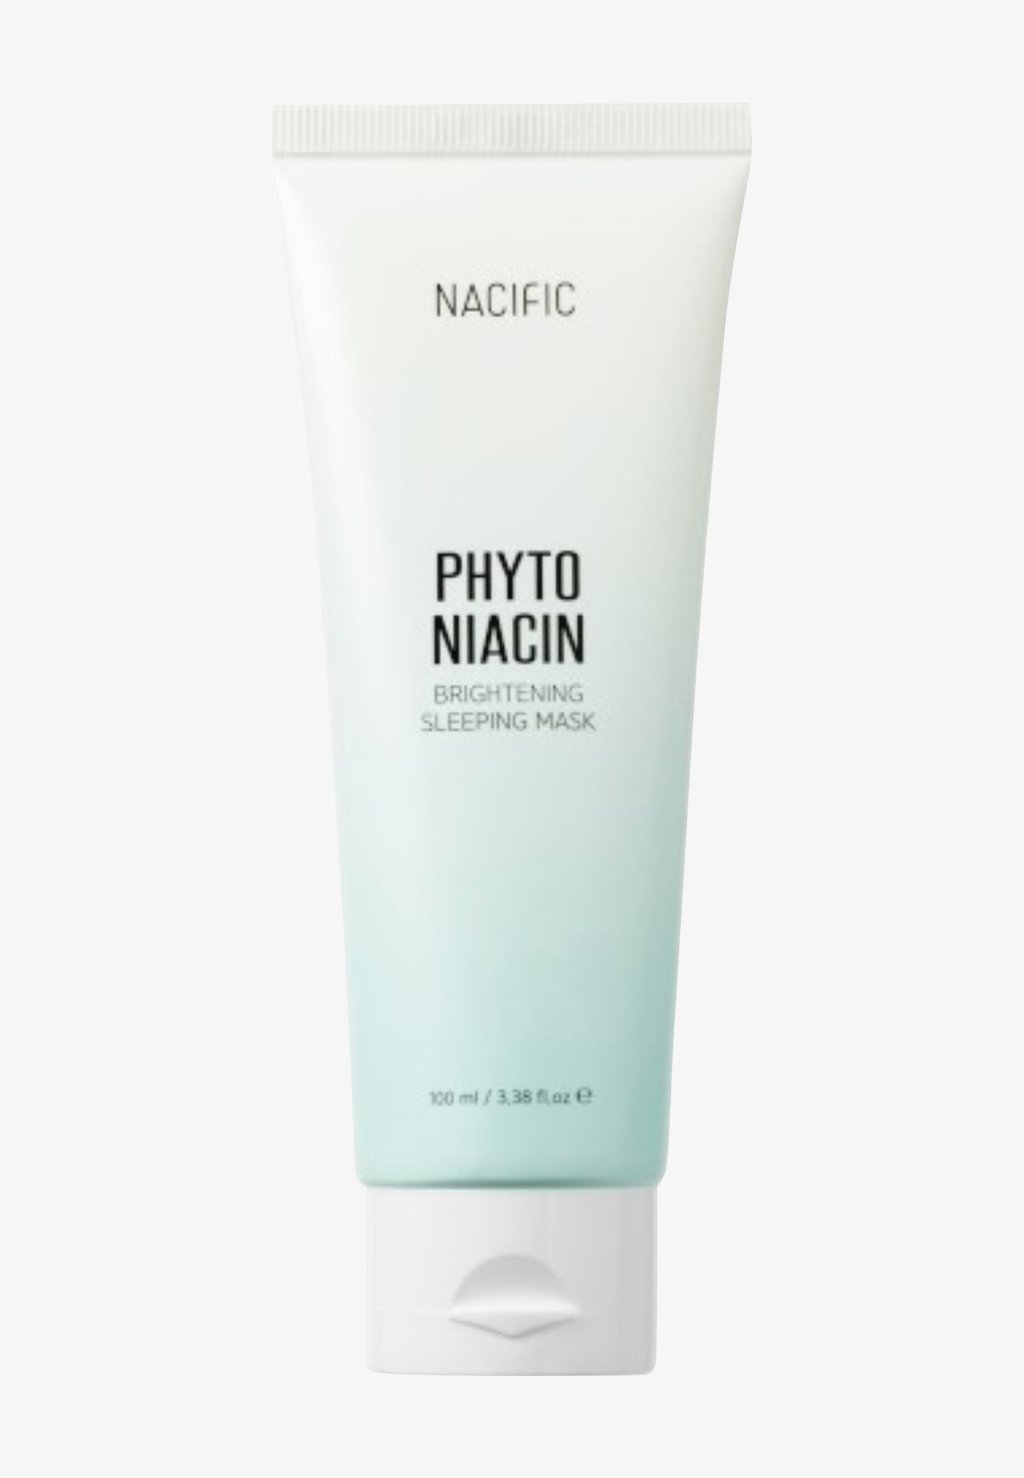 Дневной крем Phyto Niacin Brightening Sleeping Mask NACIFIC